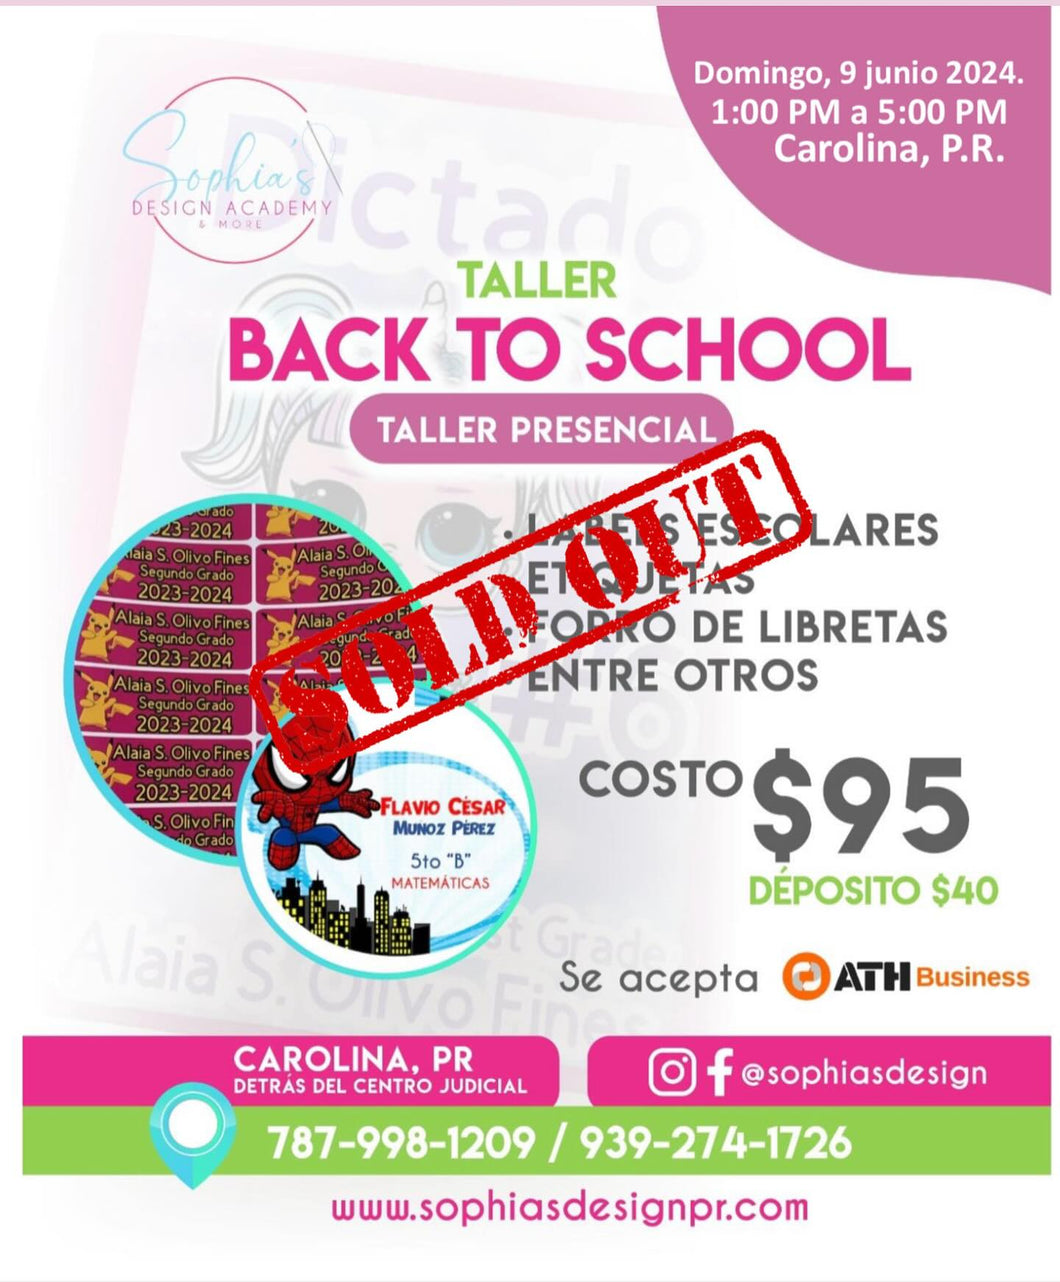 Taller Back to School - Domingo 9 de junio de 2024 (1:00 pm a 5:00 pm)